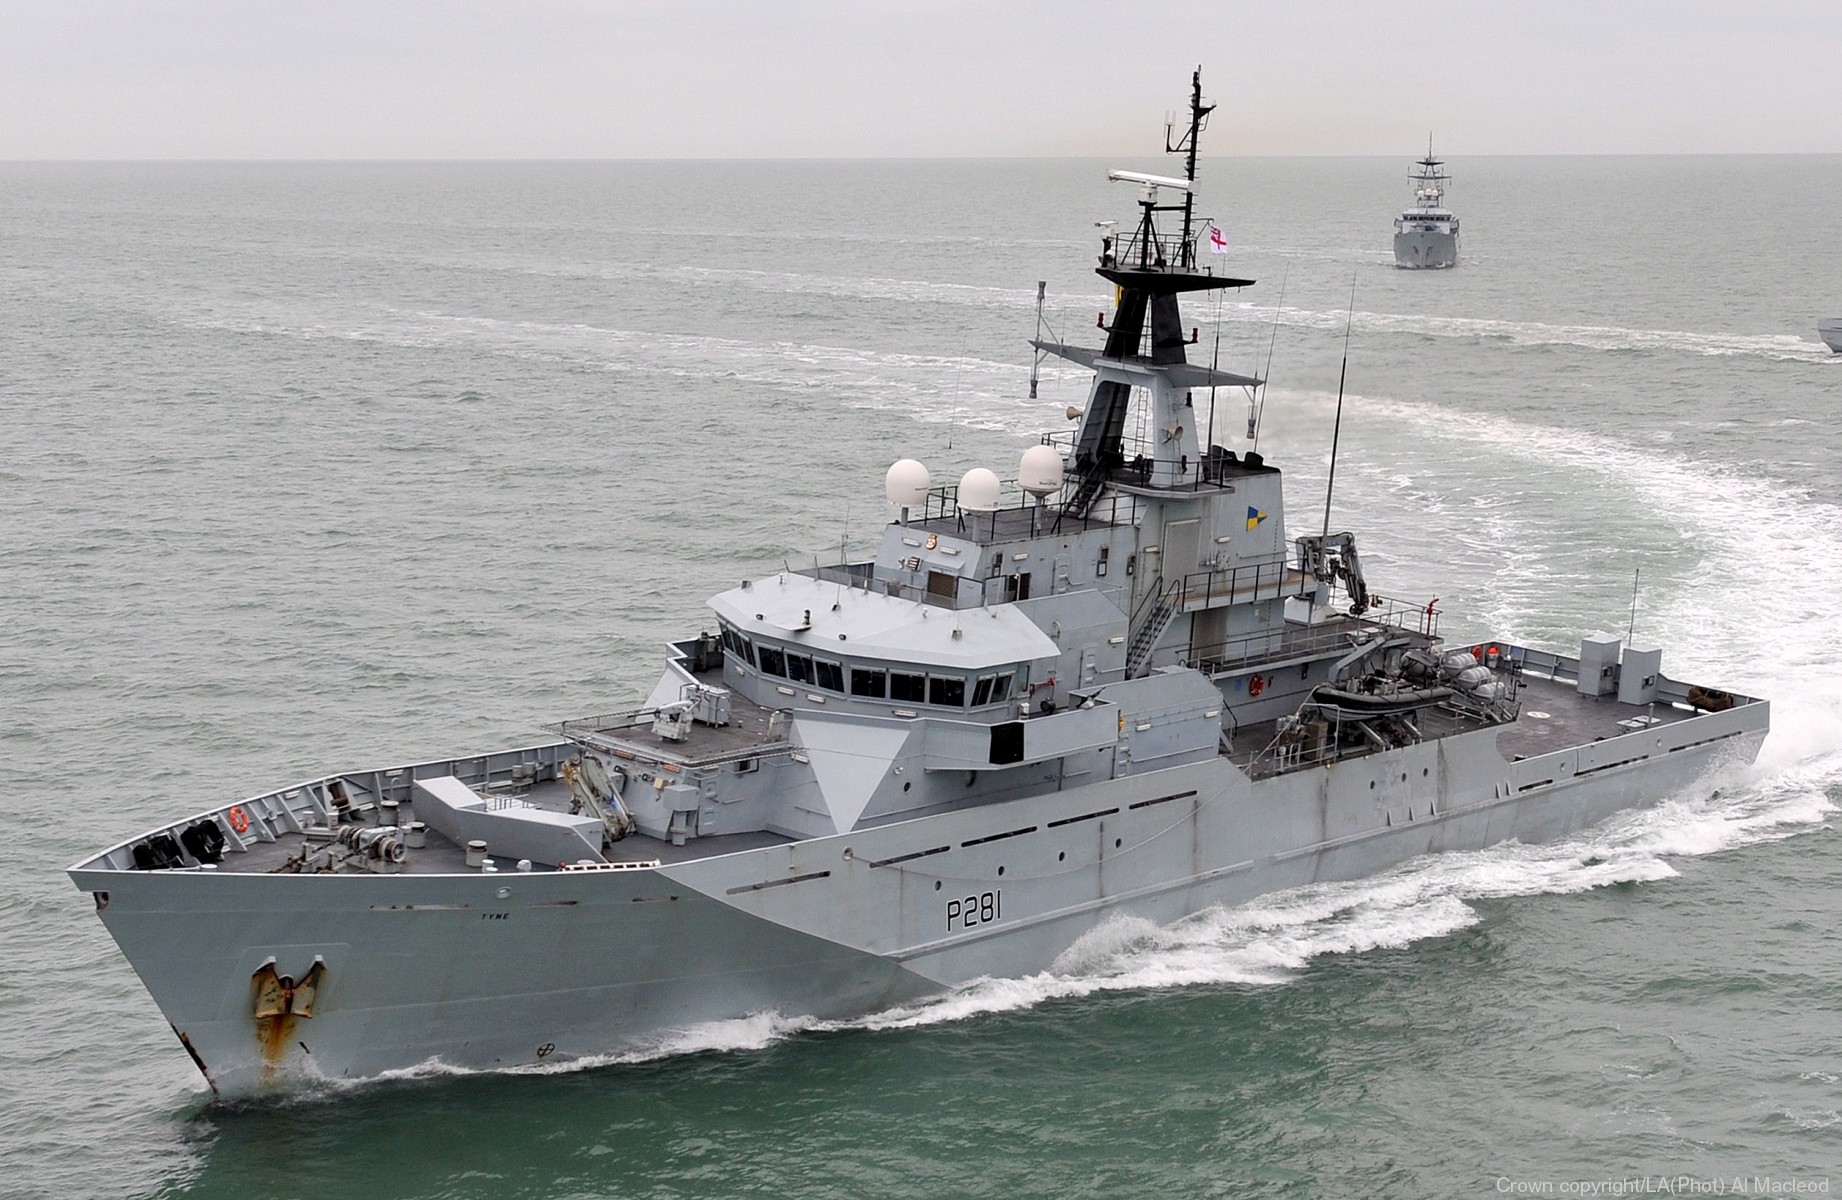 p281 hms tyne river class offshore patrol vessel opv royal navy 02c